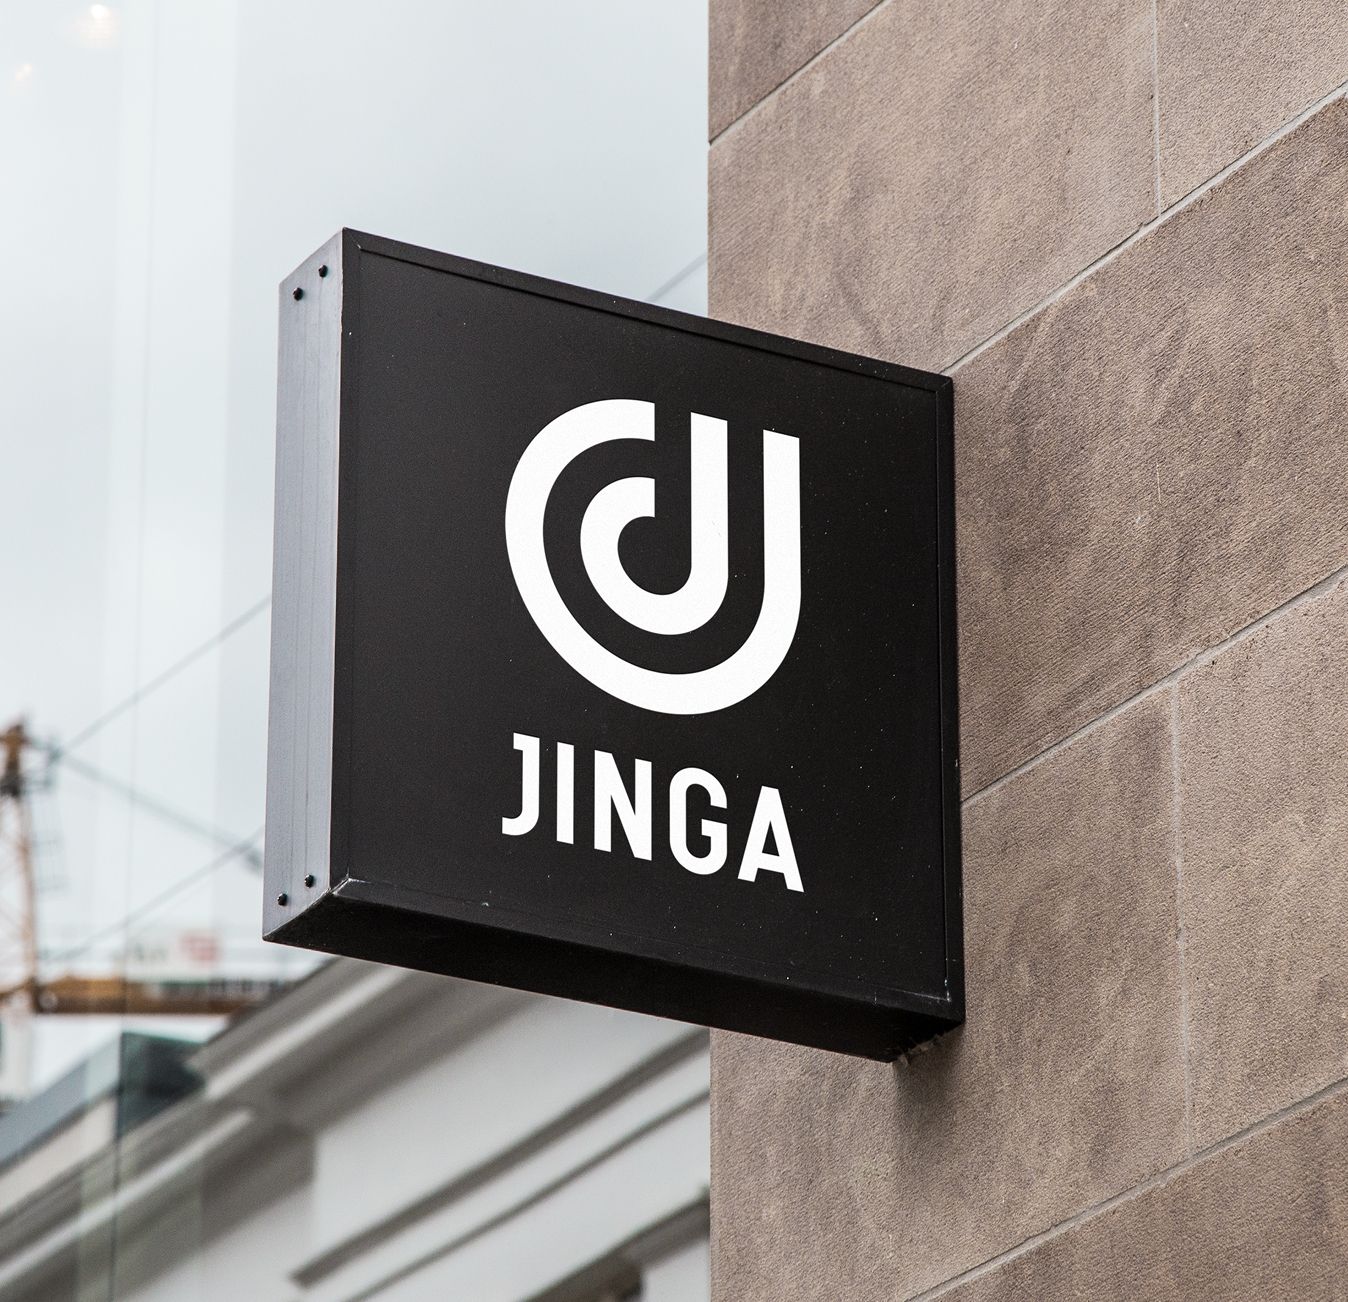 Jinga street sign